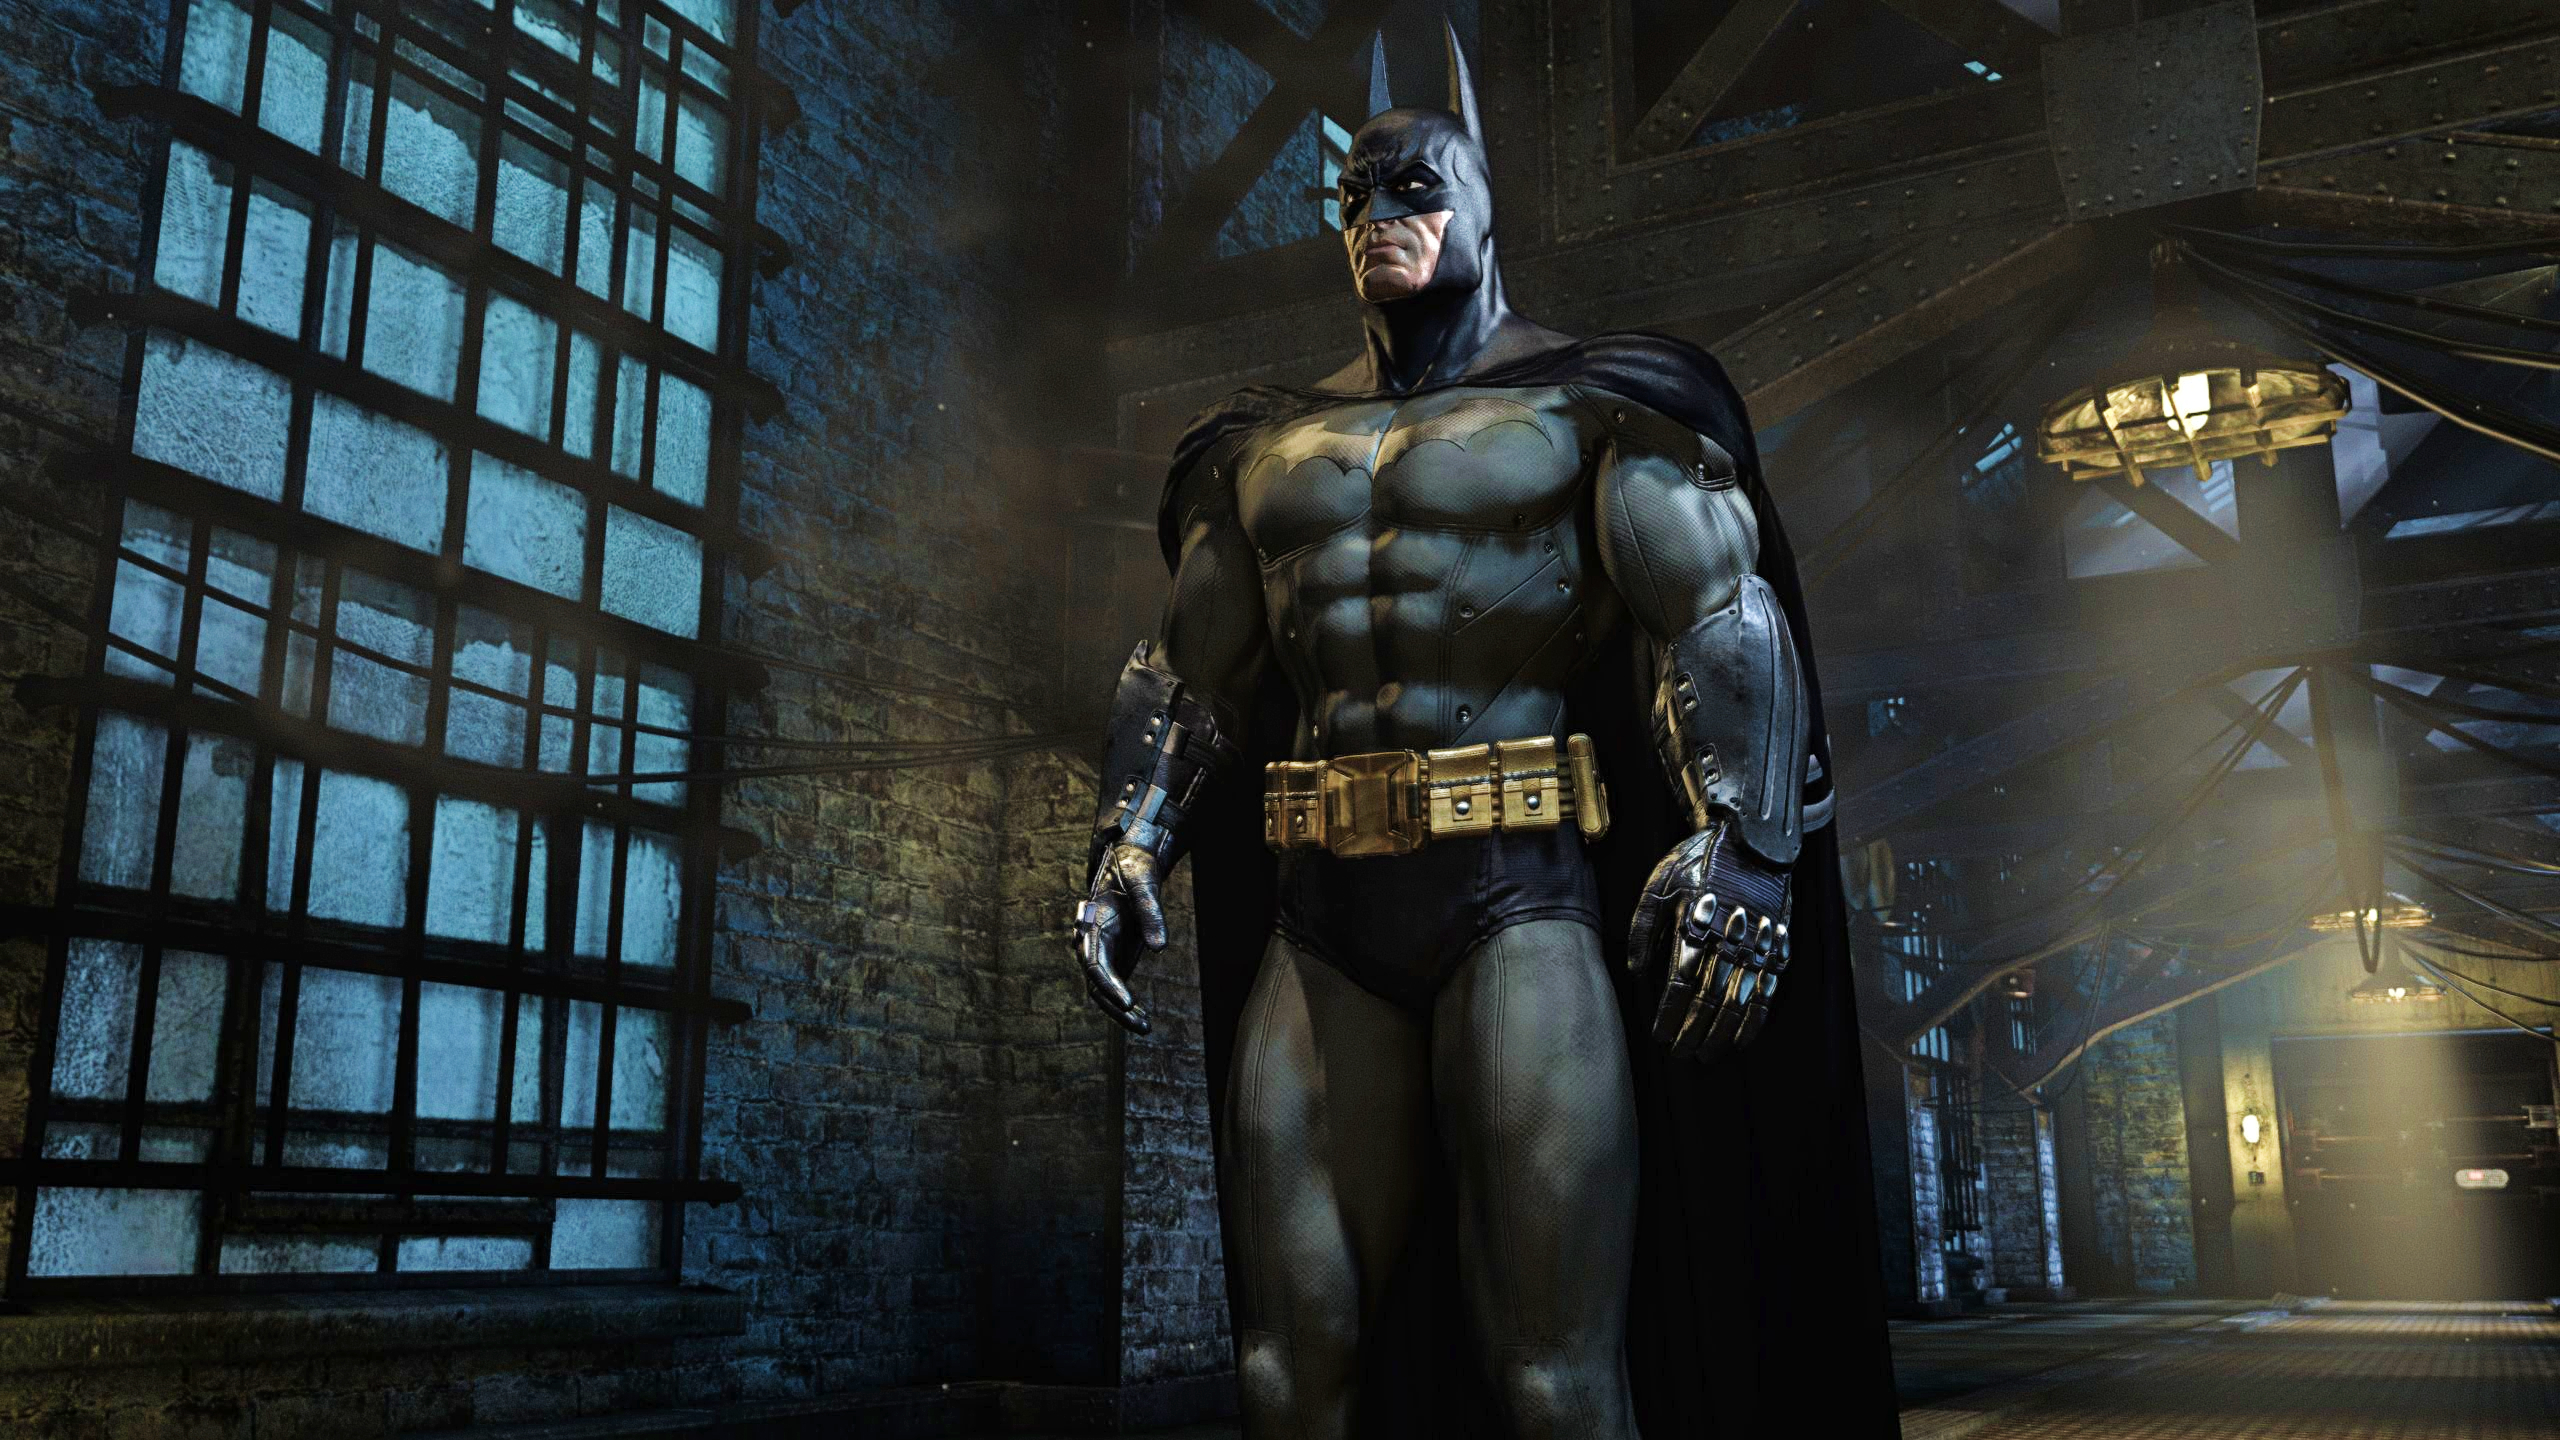 Последняя версия batman. Бэтмен Аркхем Asylum. Бэтмен 2009 Arkham Asylum. Бэтмен аркхам асайлум. Бэтмен Аркхем асилум Бэтмен.